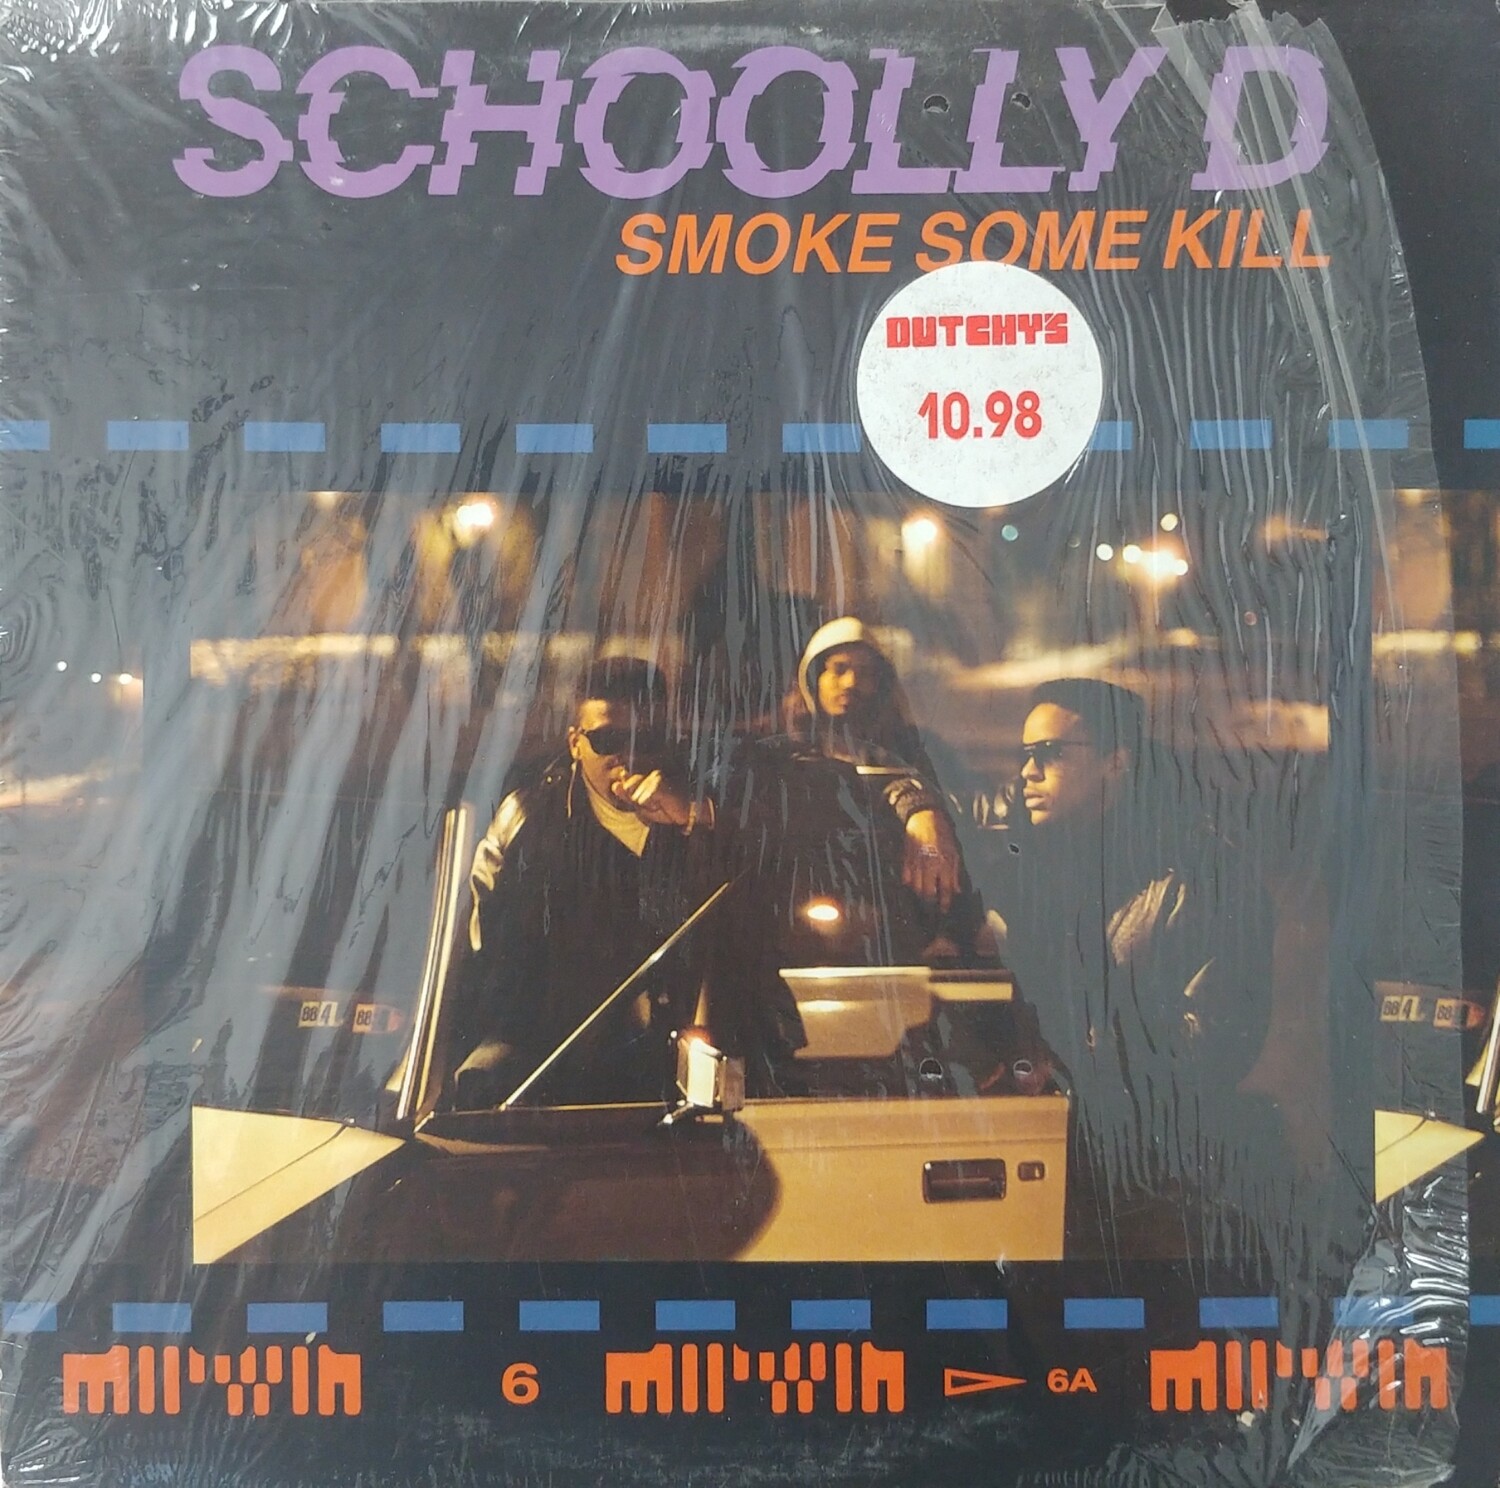 Schooly D - Smoke aime kill